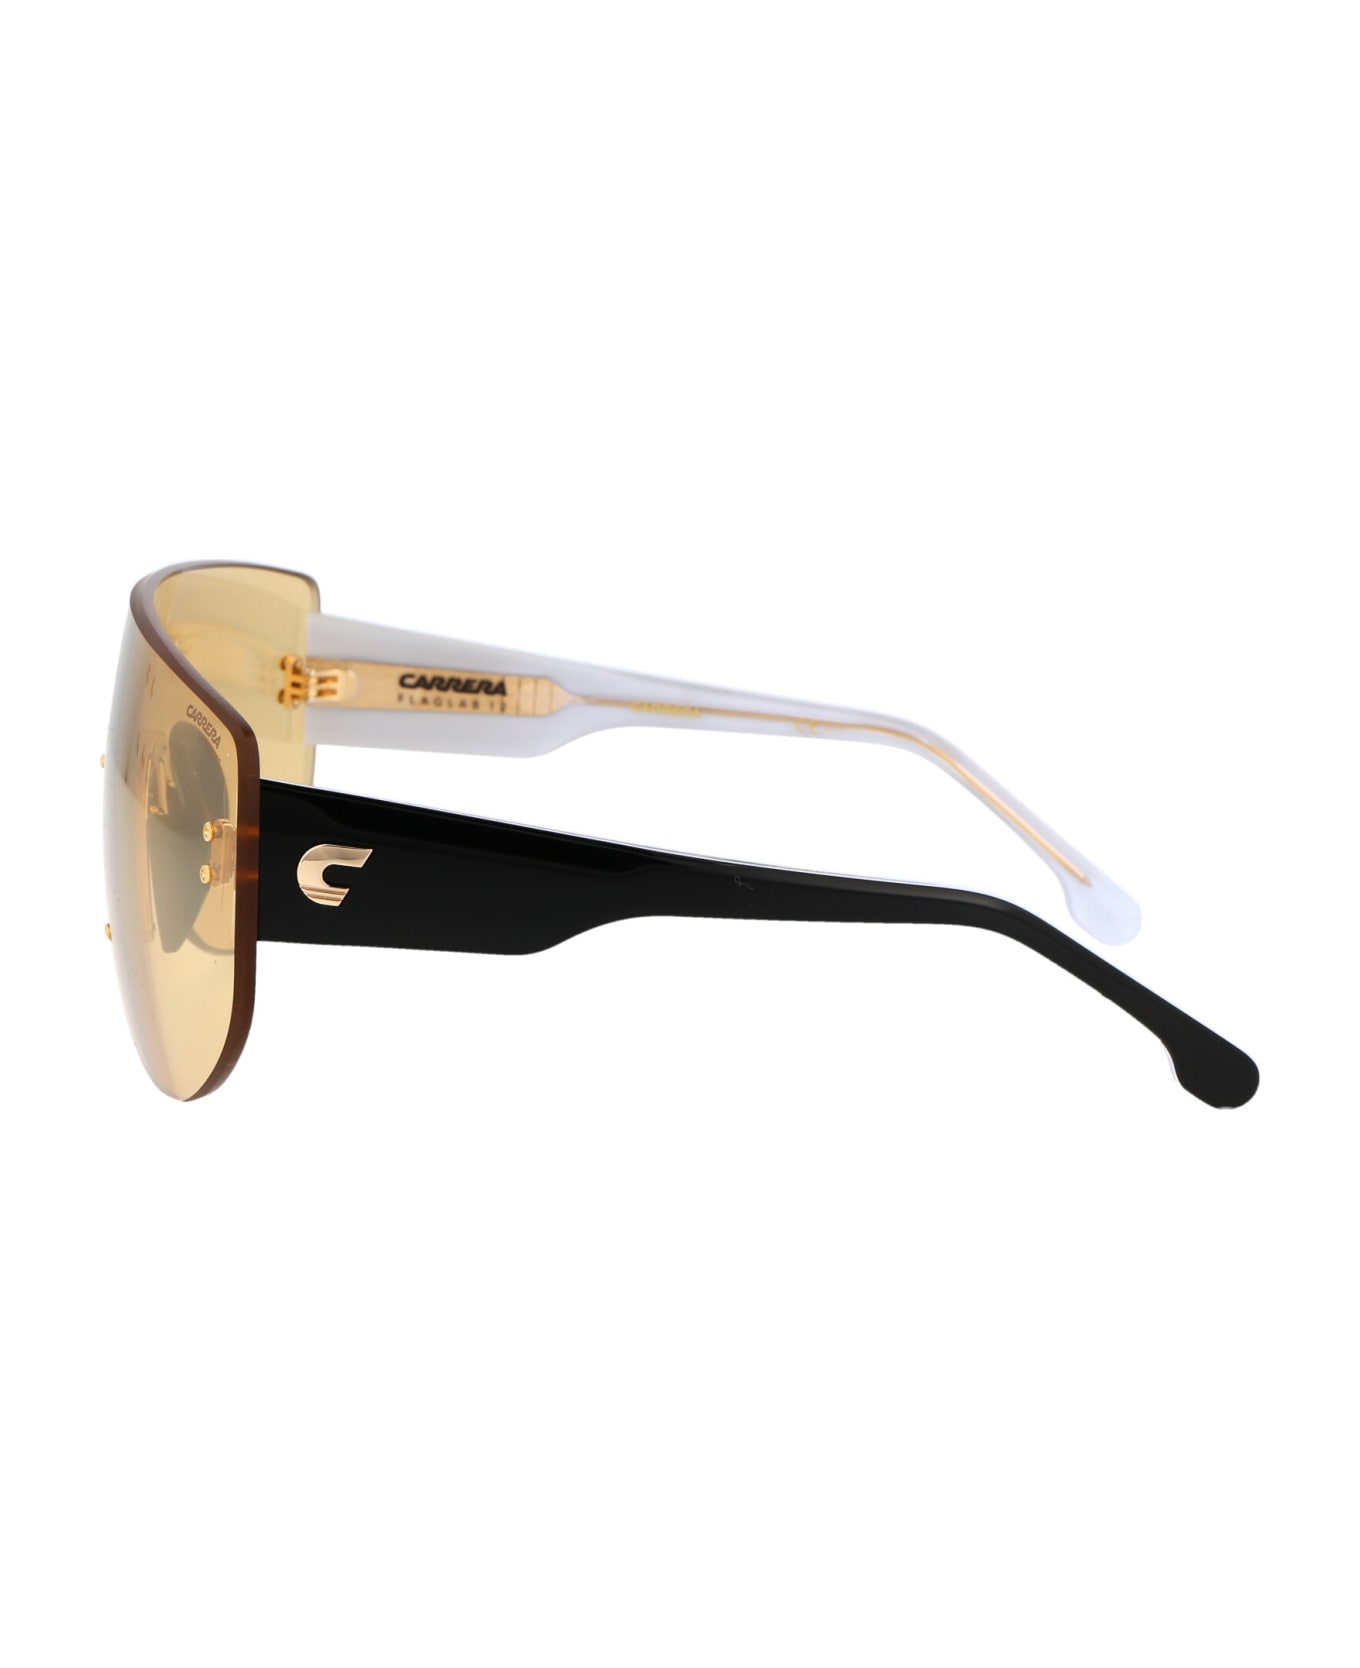 Carrera Flaglab 12 Sunglasses - 4CWET YELLOW BLACK サングラス